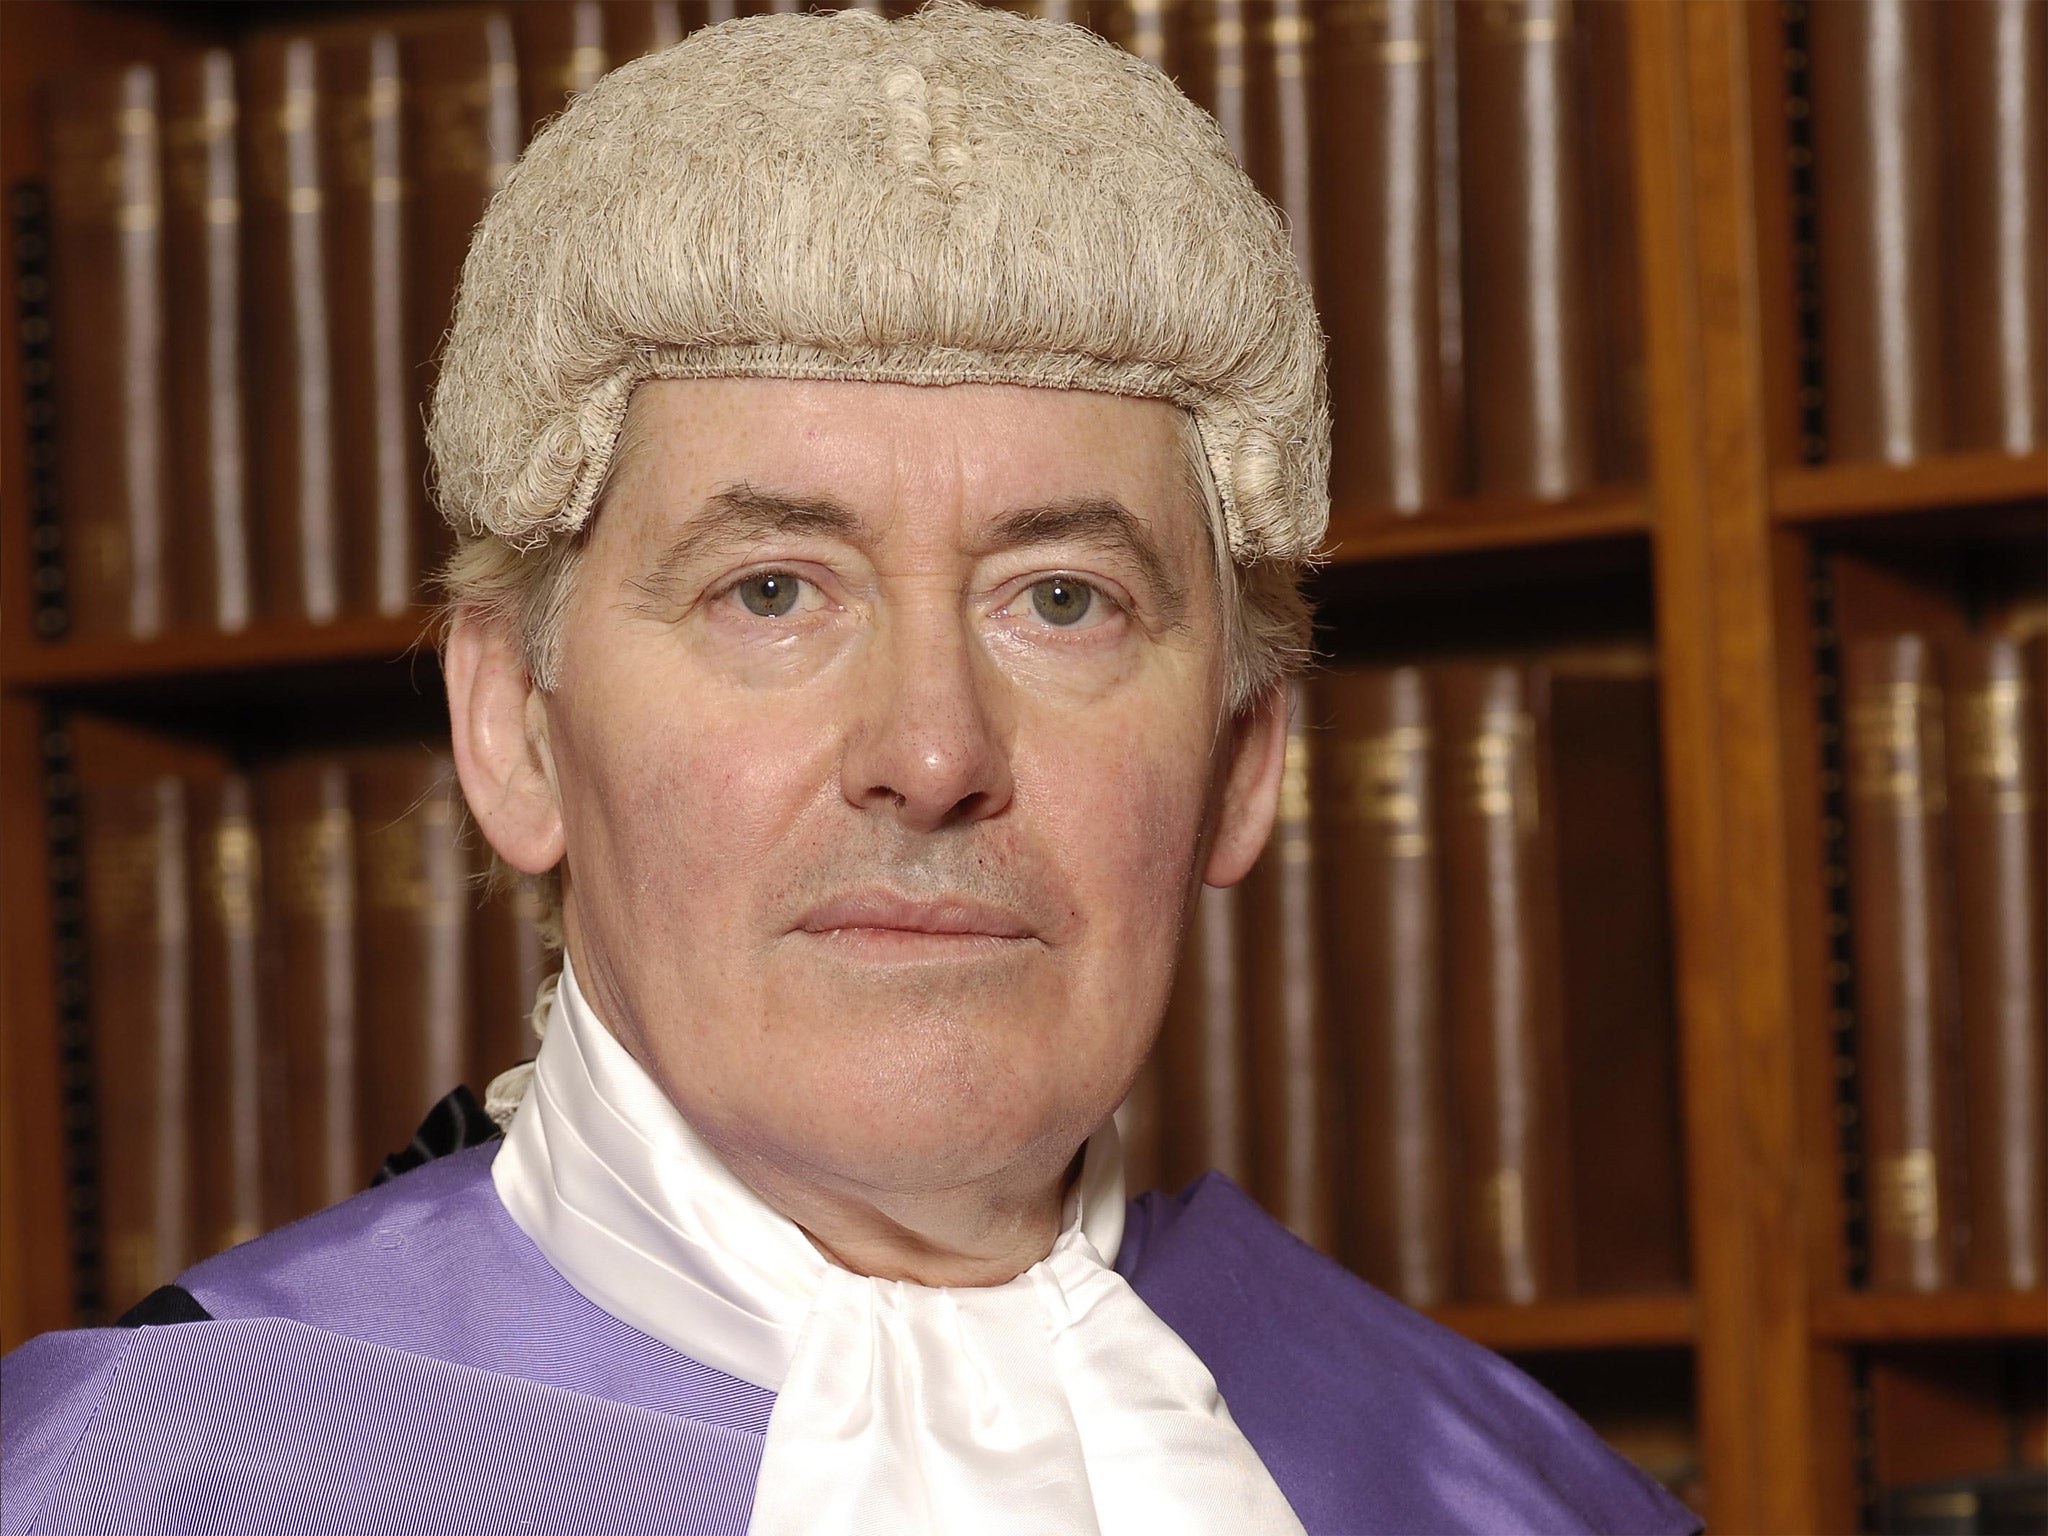 Sympathetic: Judge Graham White